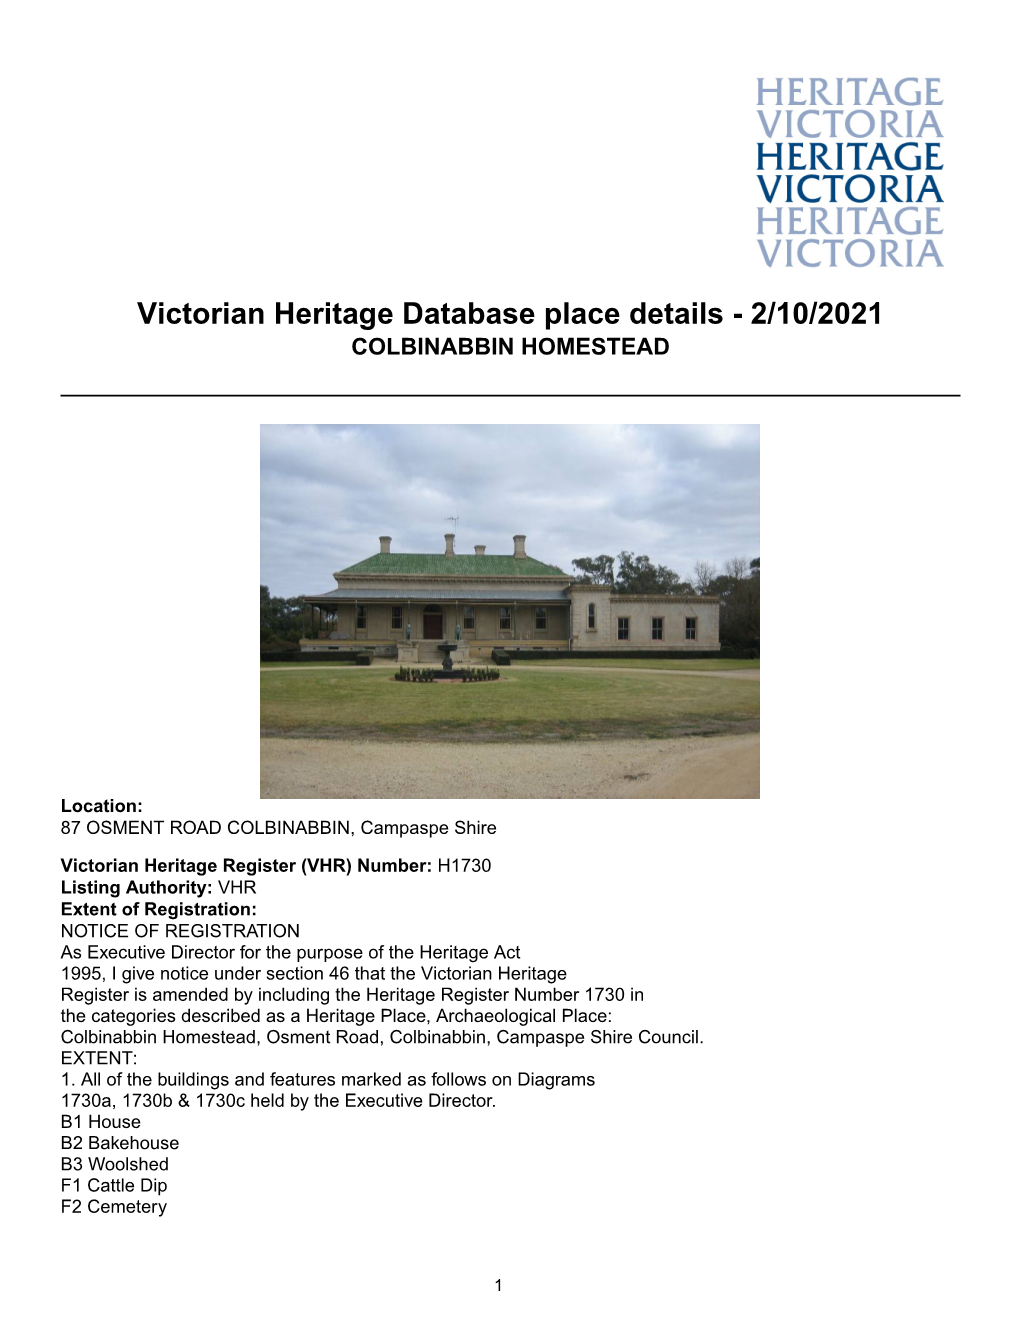 Victorian Heritage Database Place Details - 2/10/2021 COLBINABBIN HOMESTEAD